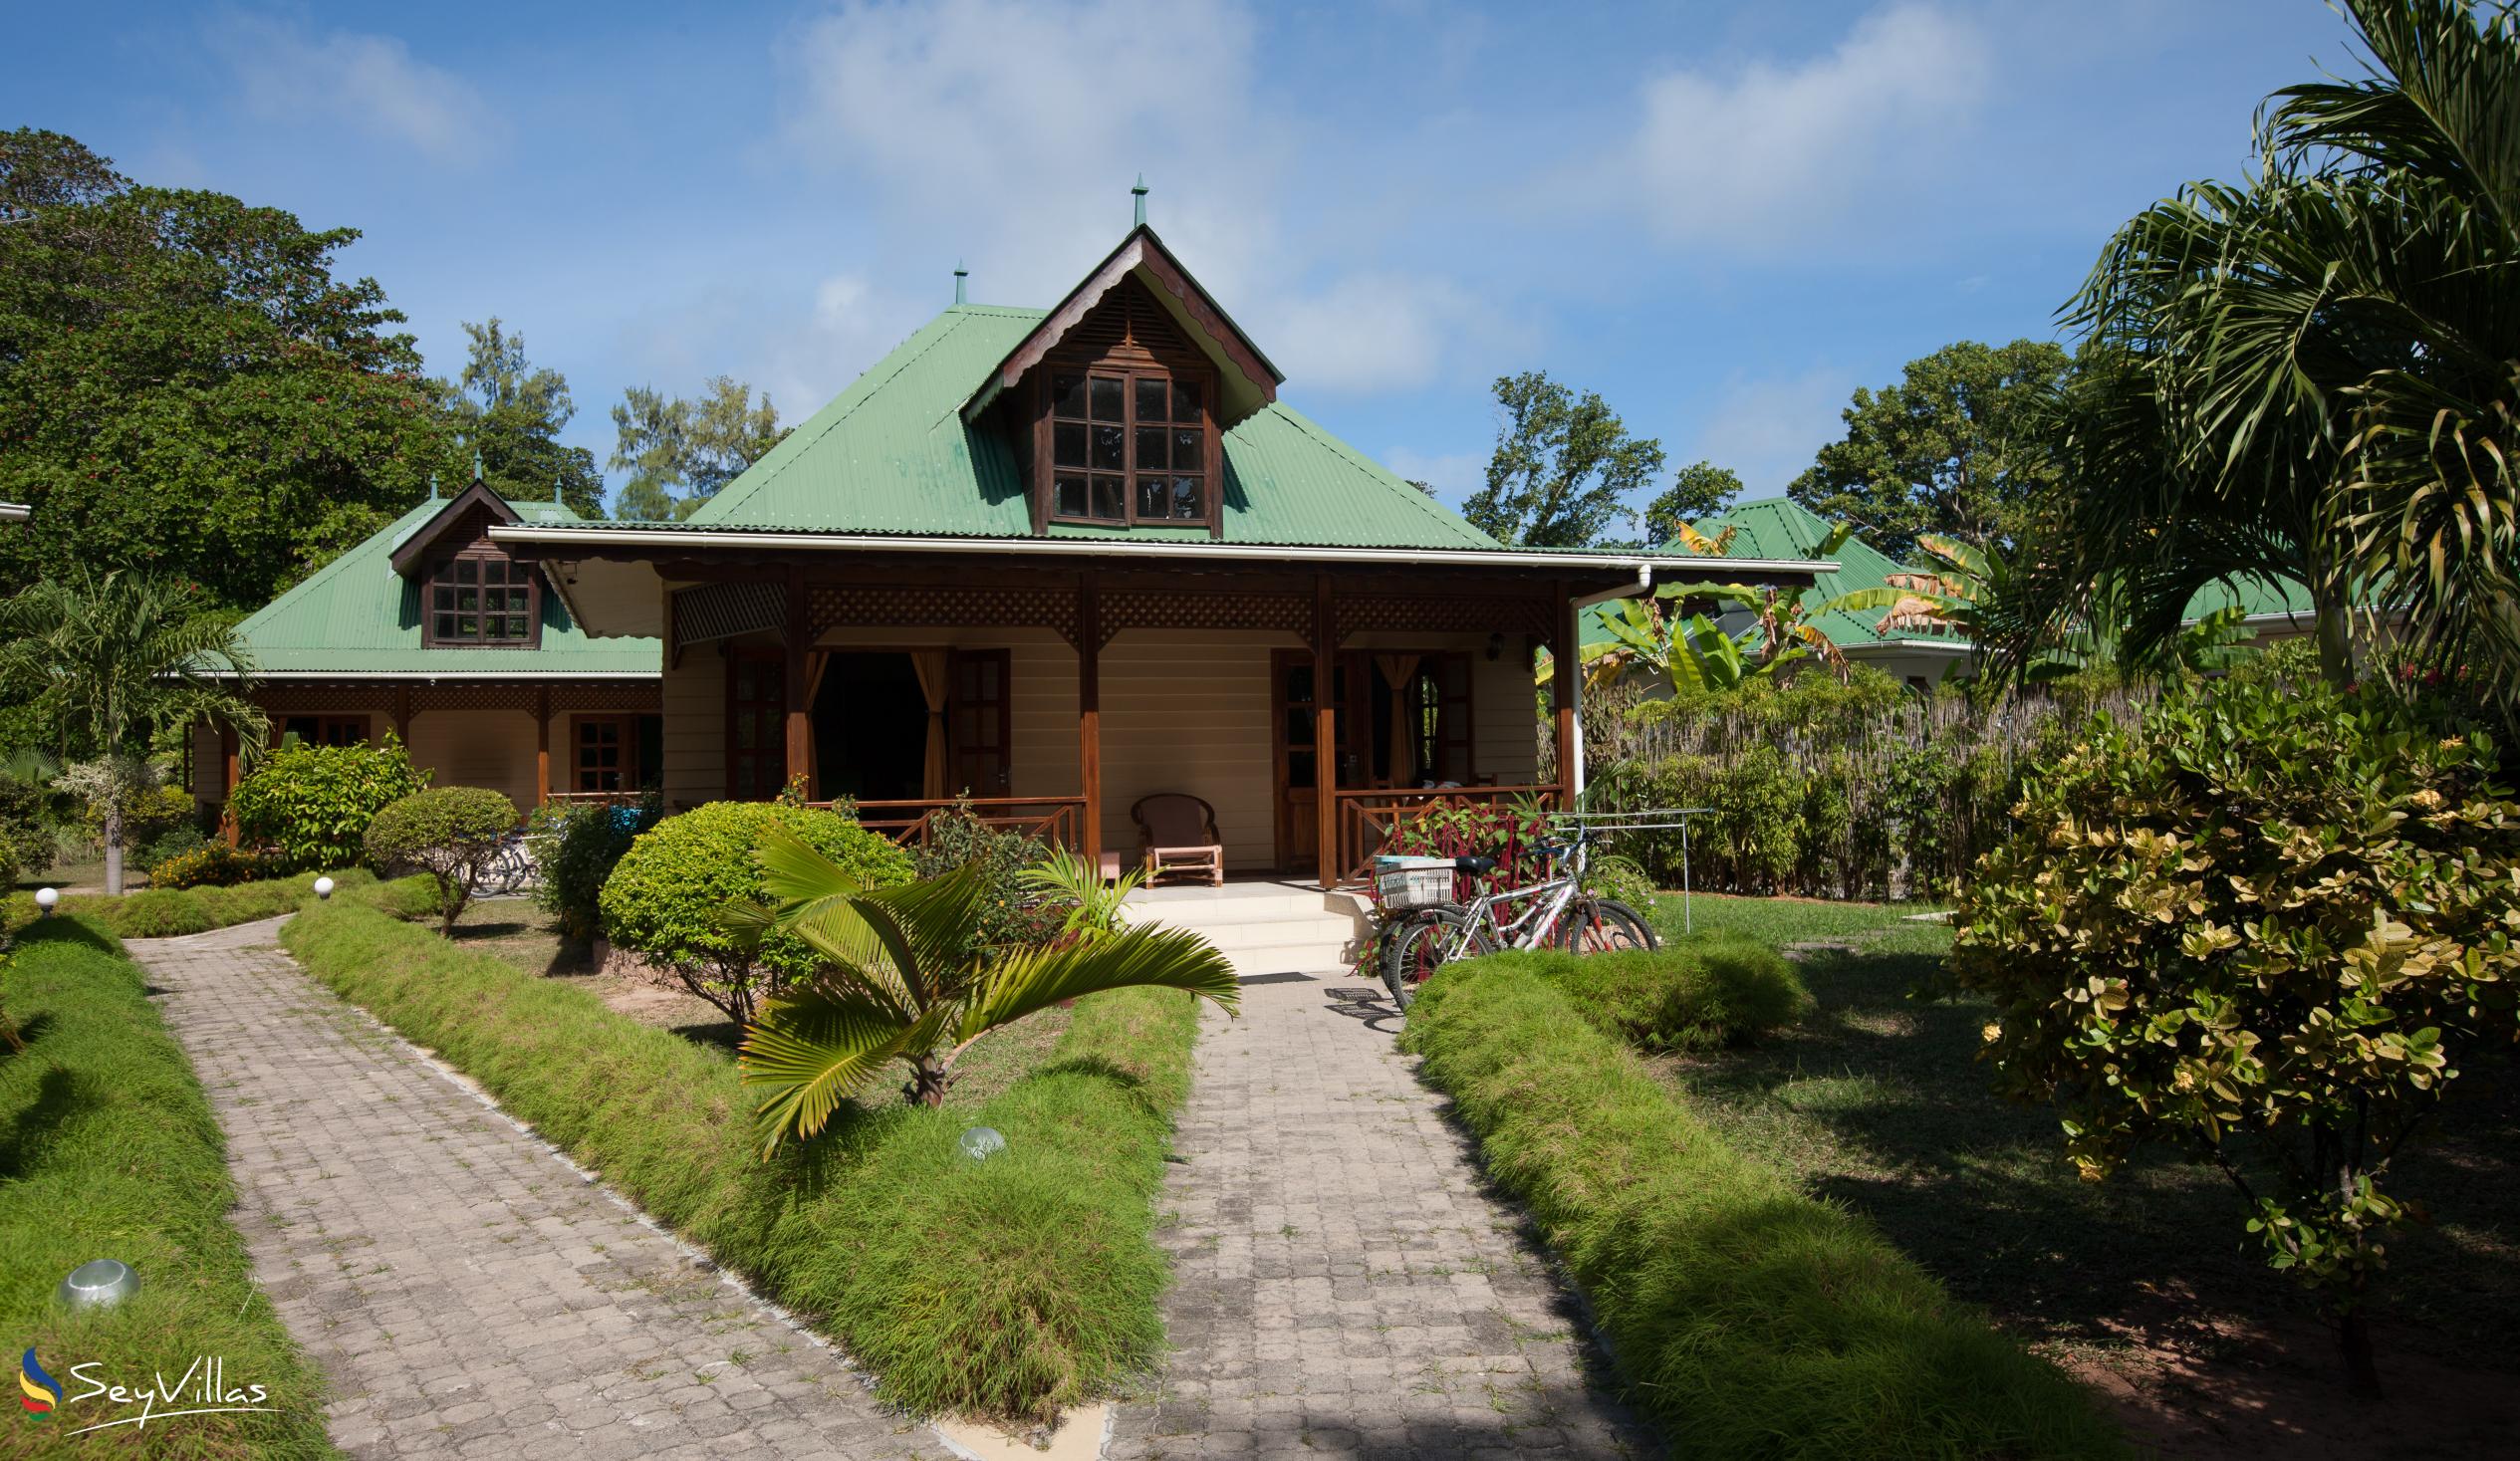 Foto 11: Villa Creole - Aussenbereich - La Digue (Seychellen)